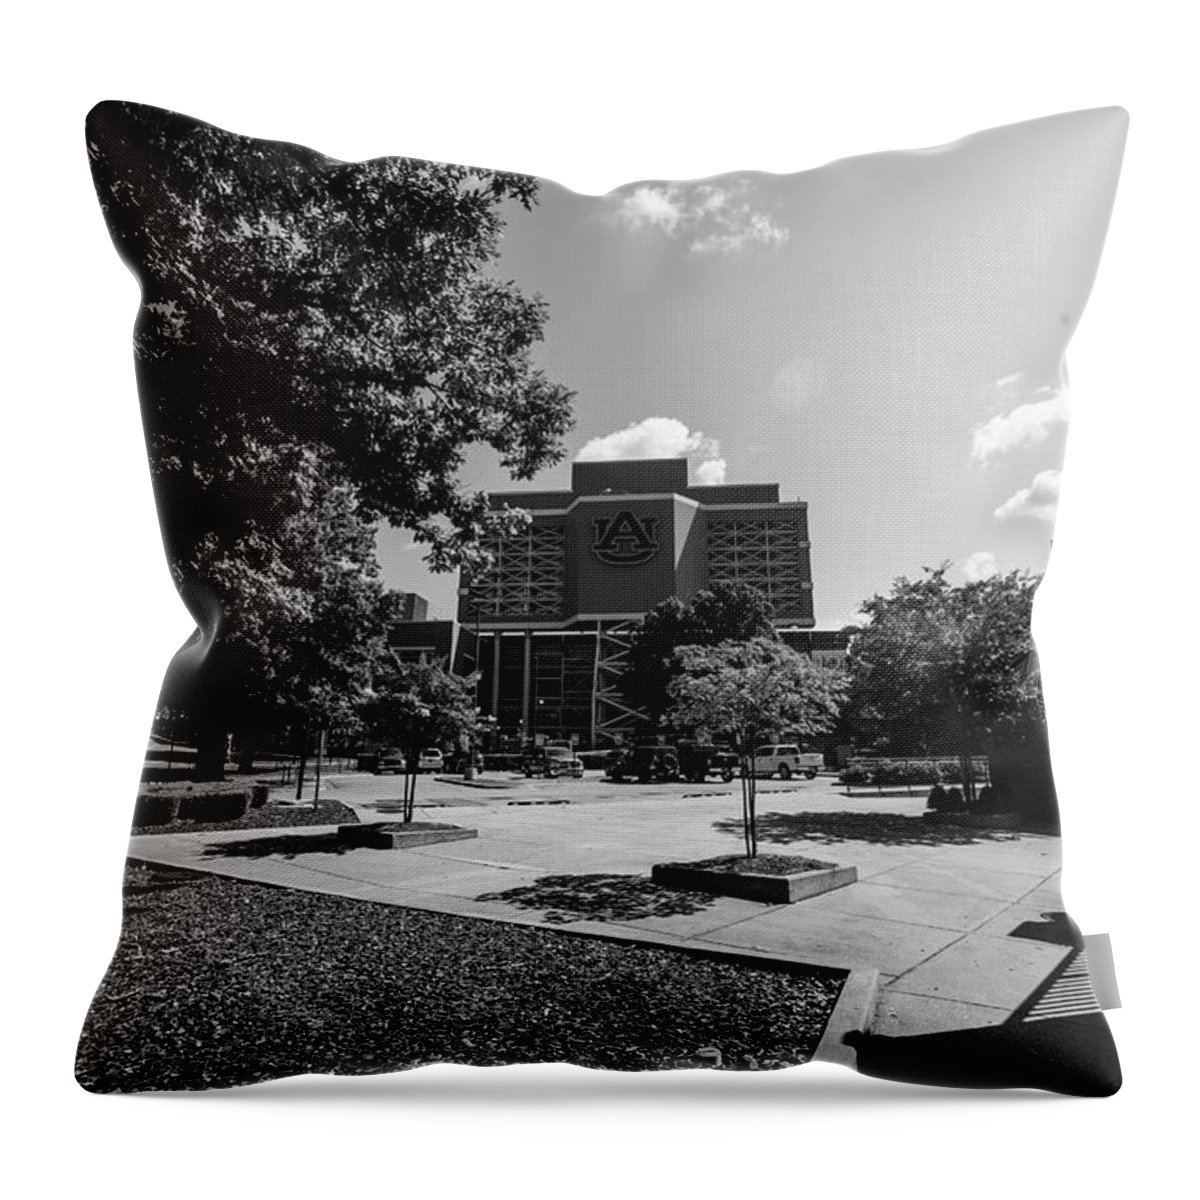 Auburn Tigers Throw Pillow featuring the photograph Entrance view of Jordan Hare Stadium at Auburn University by Eldon McGraw